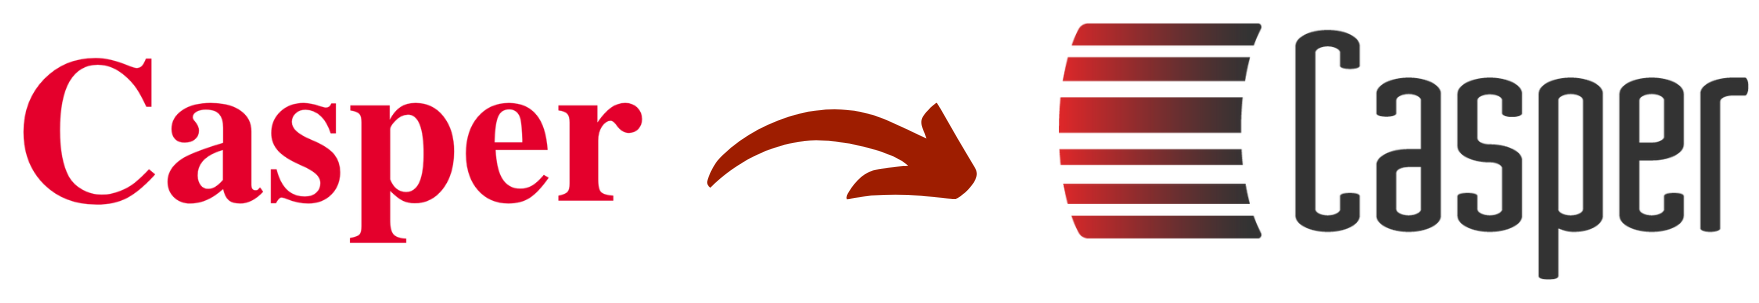 Casper-Logo-Entwicklung